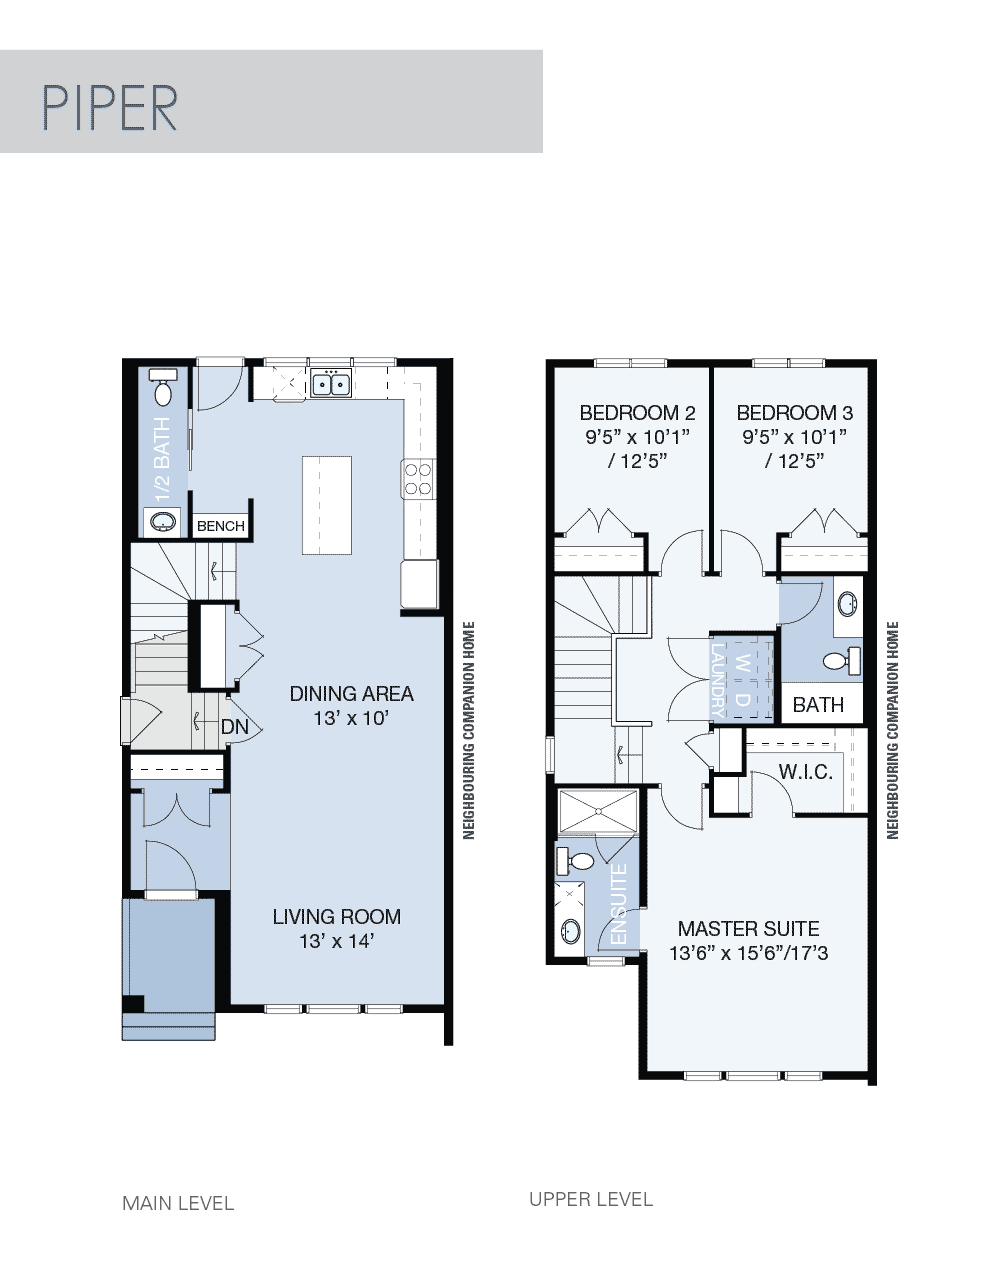 Piper floorplan